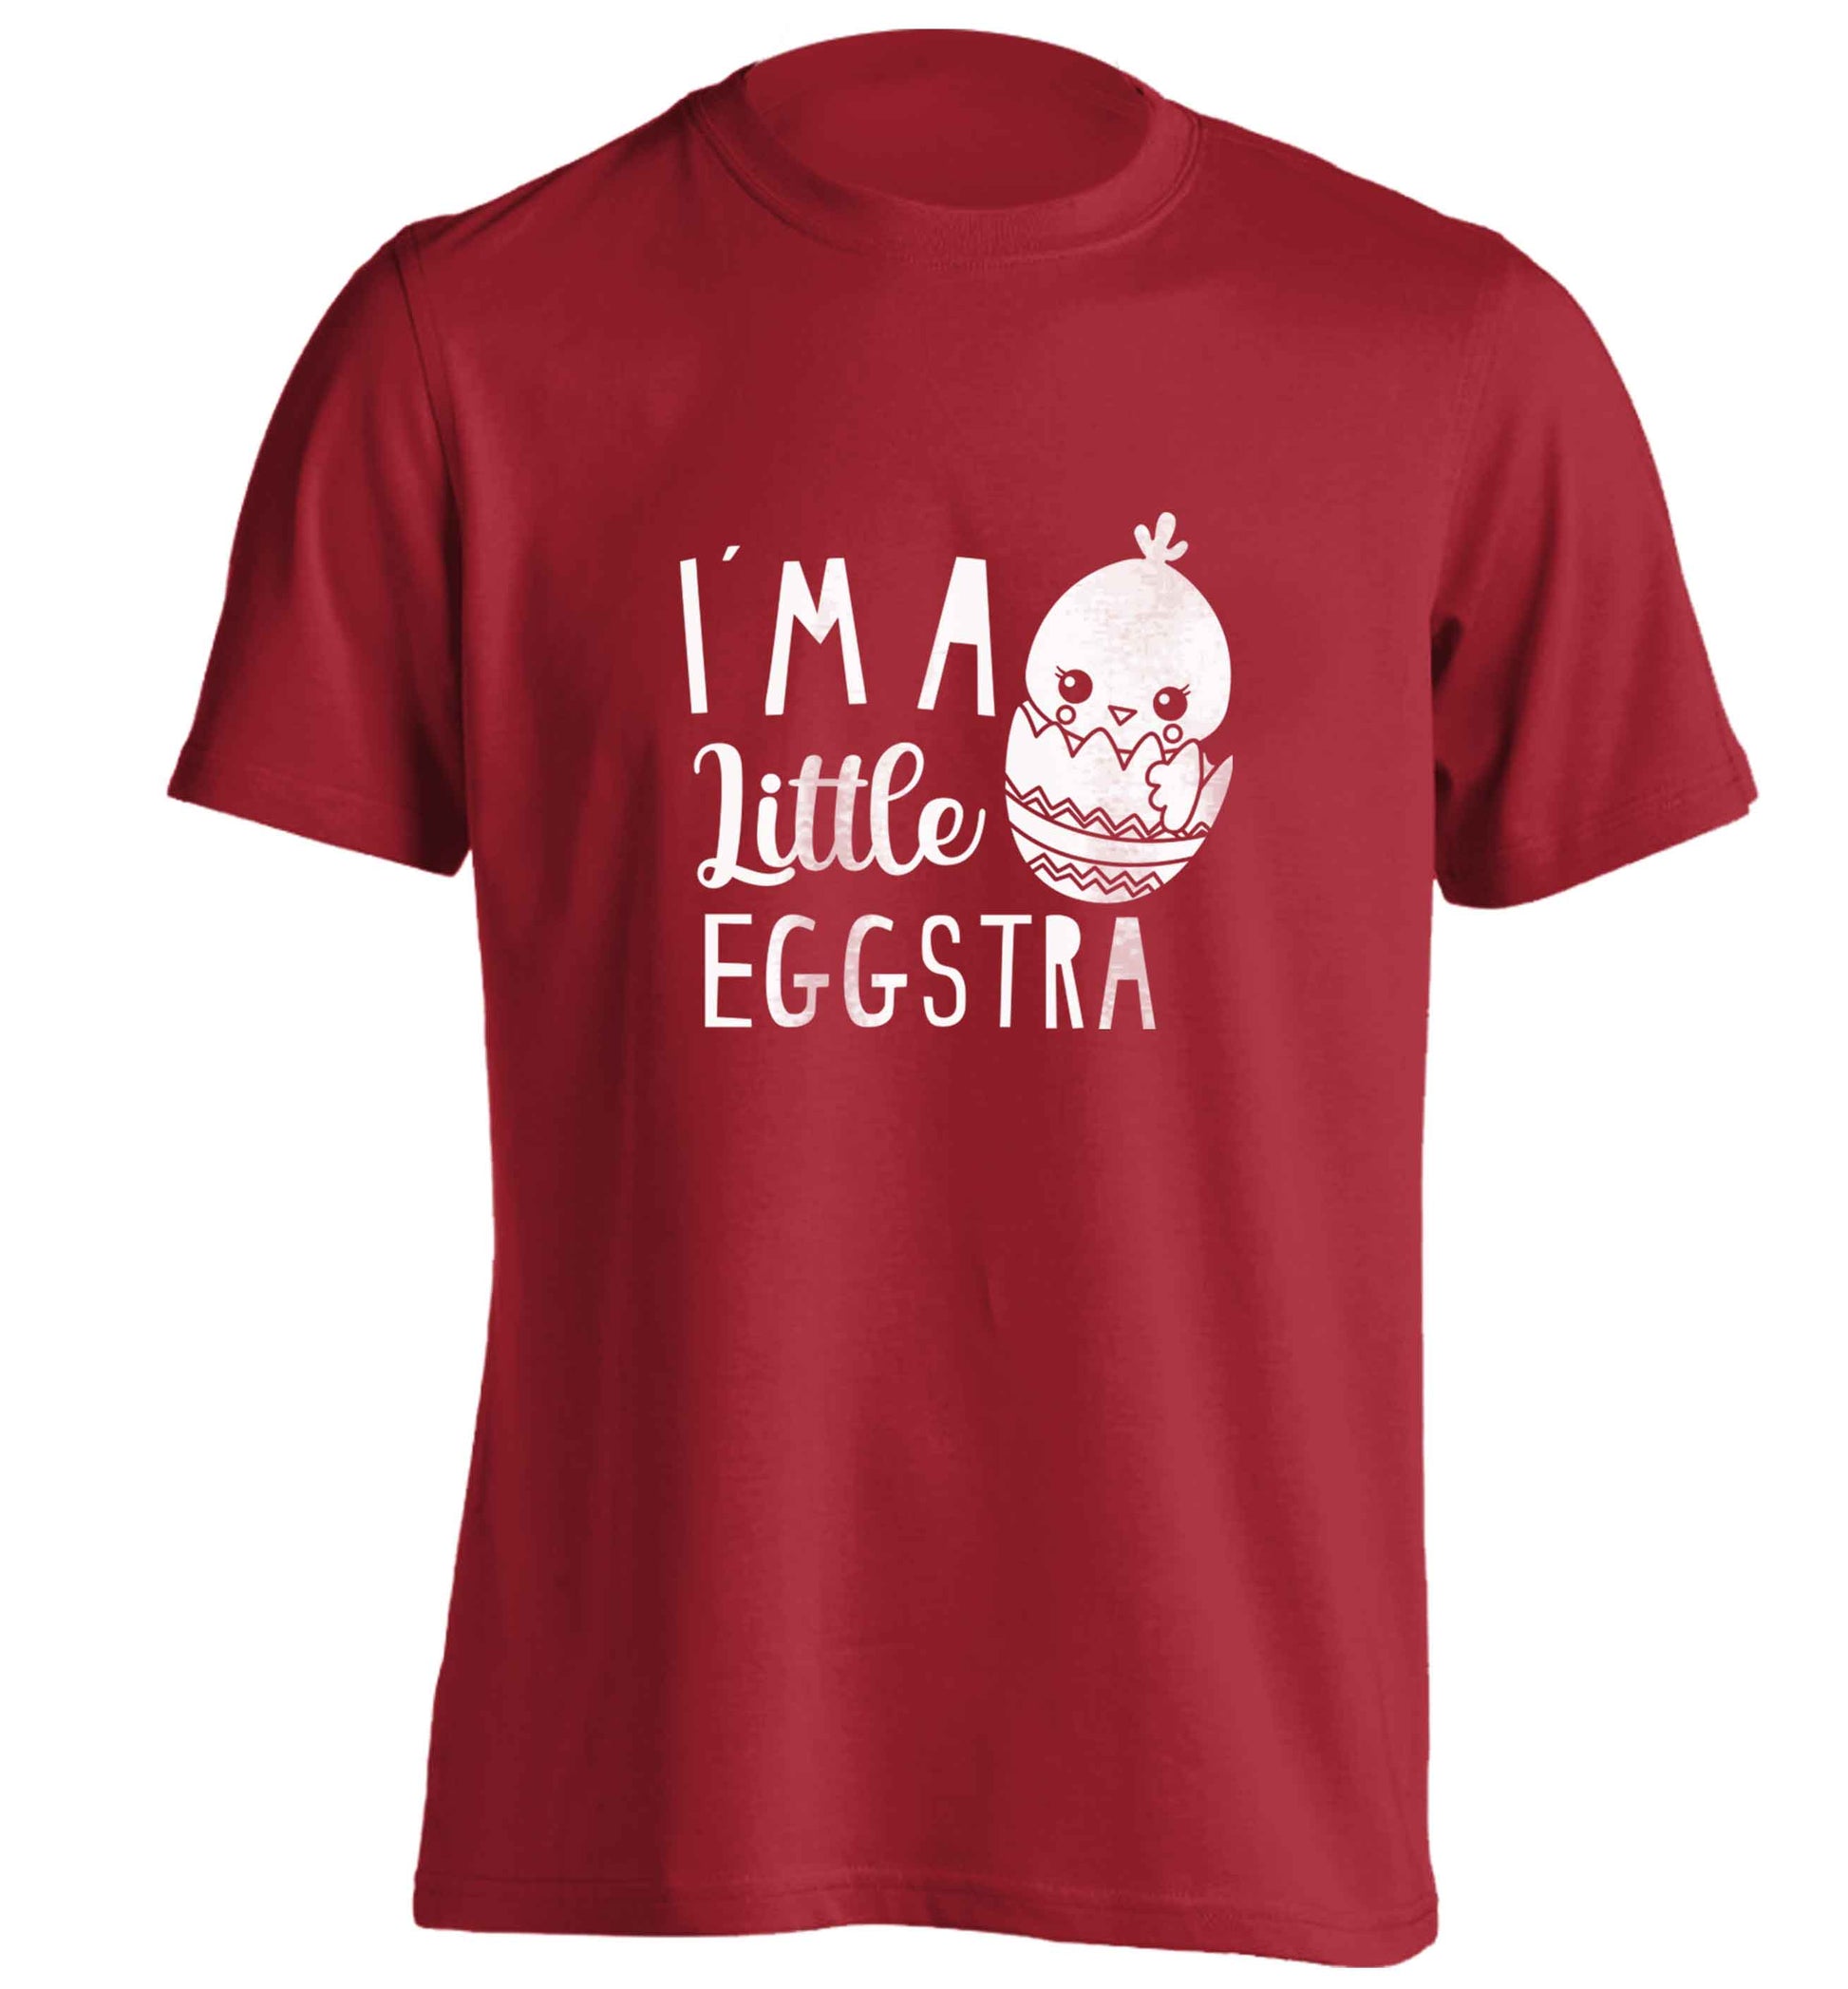 I'm a little eggstra adults unisex red Tshirt 2XL